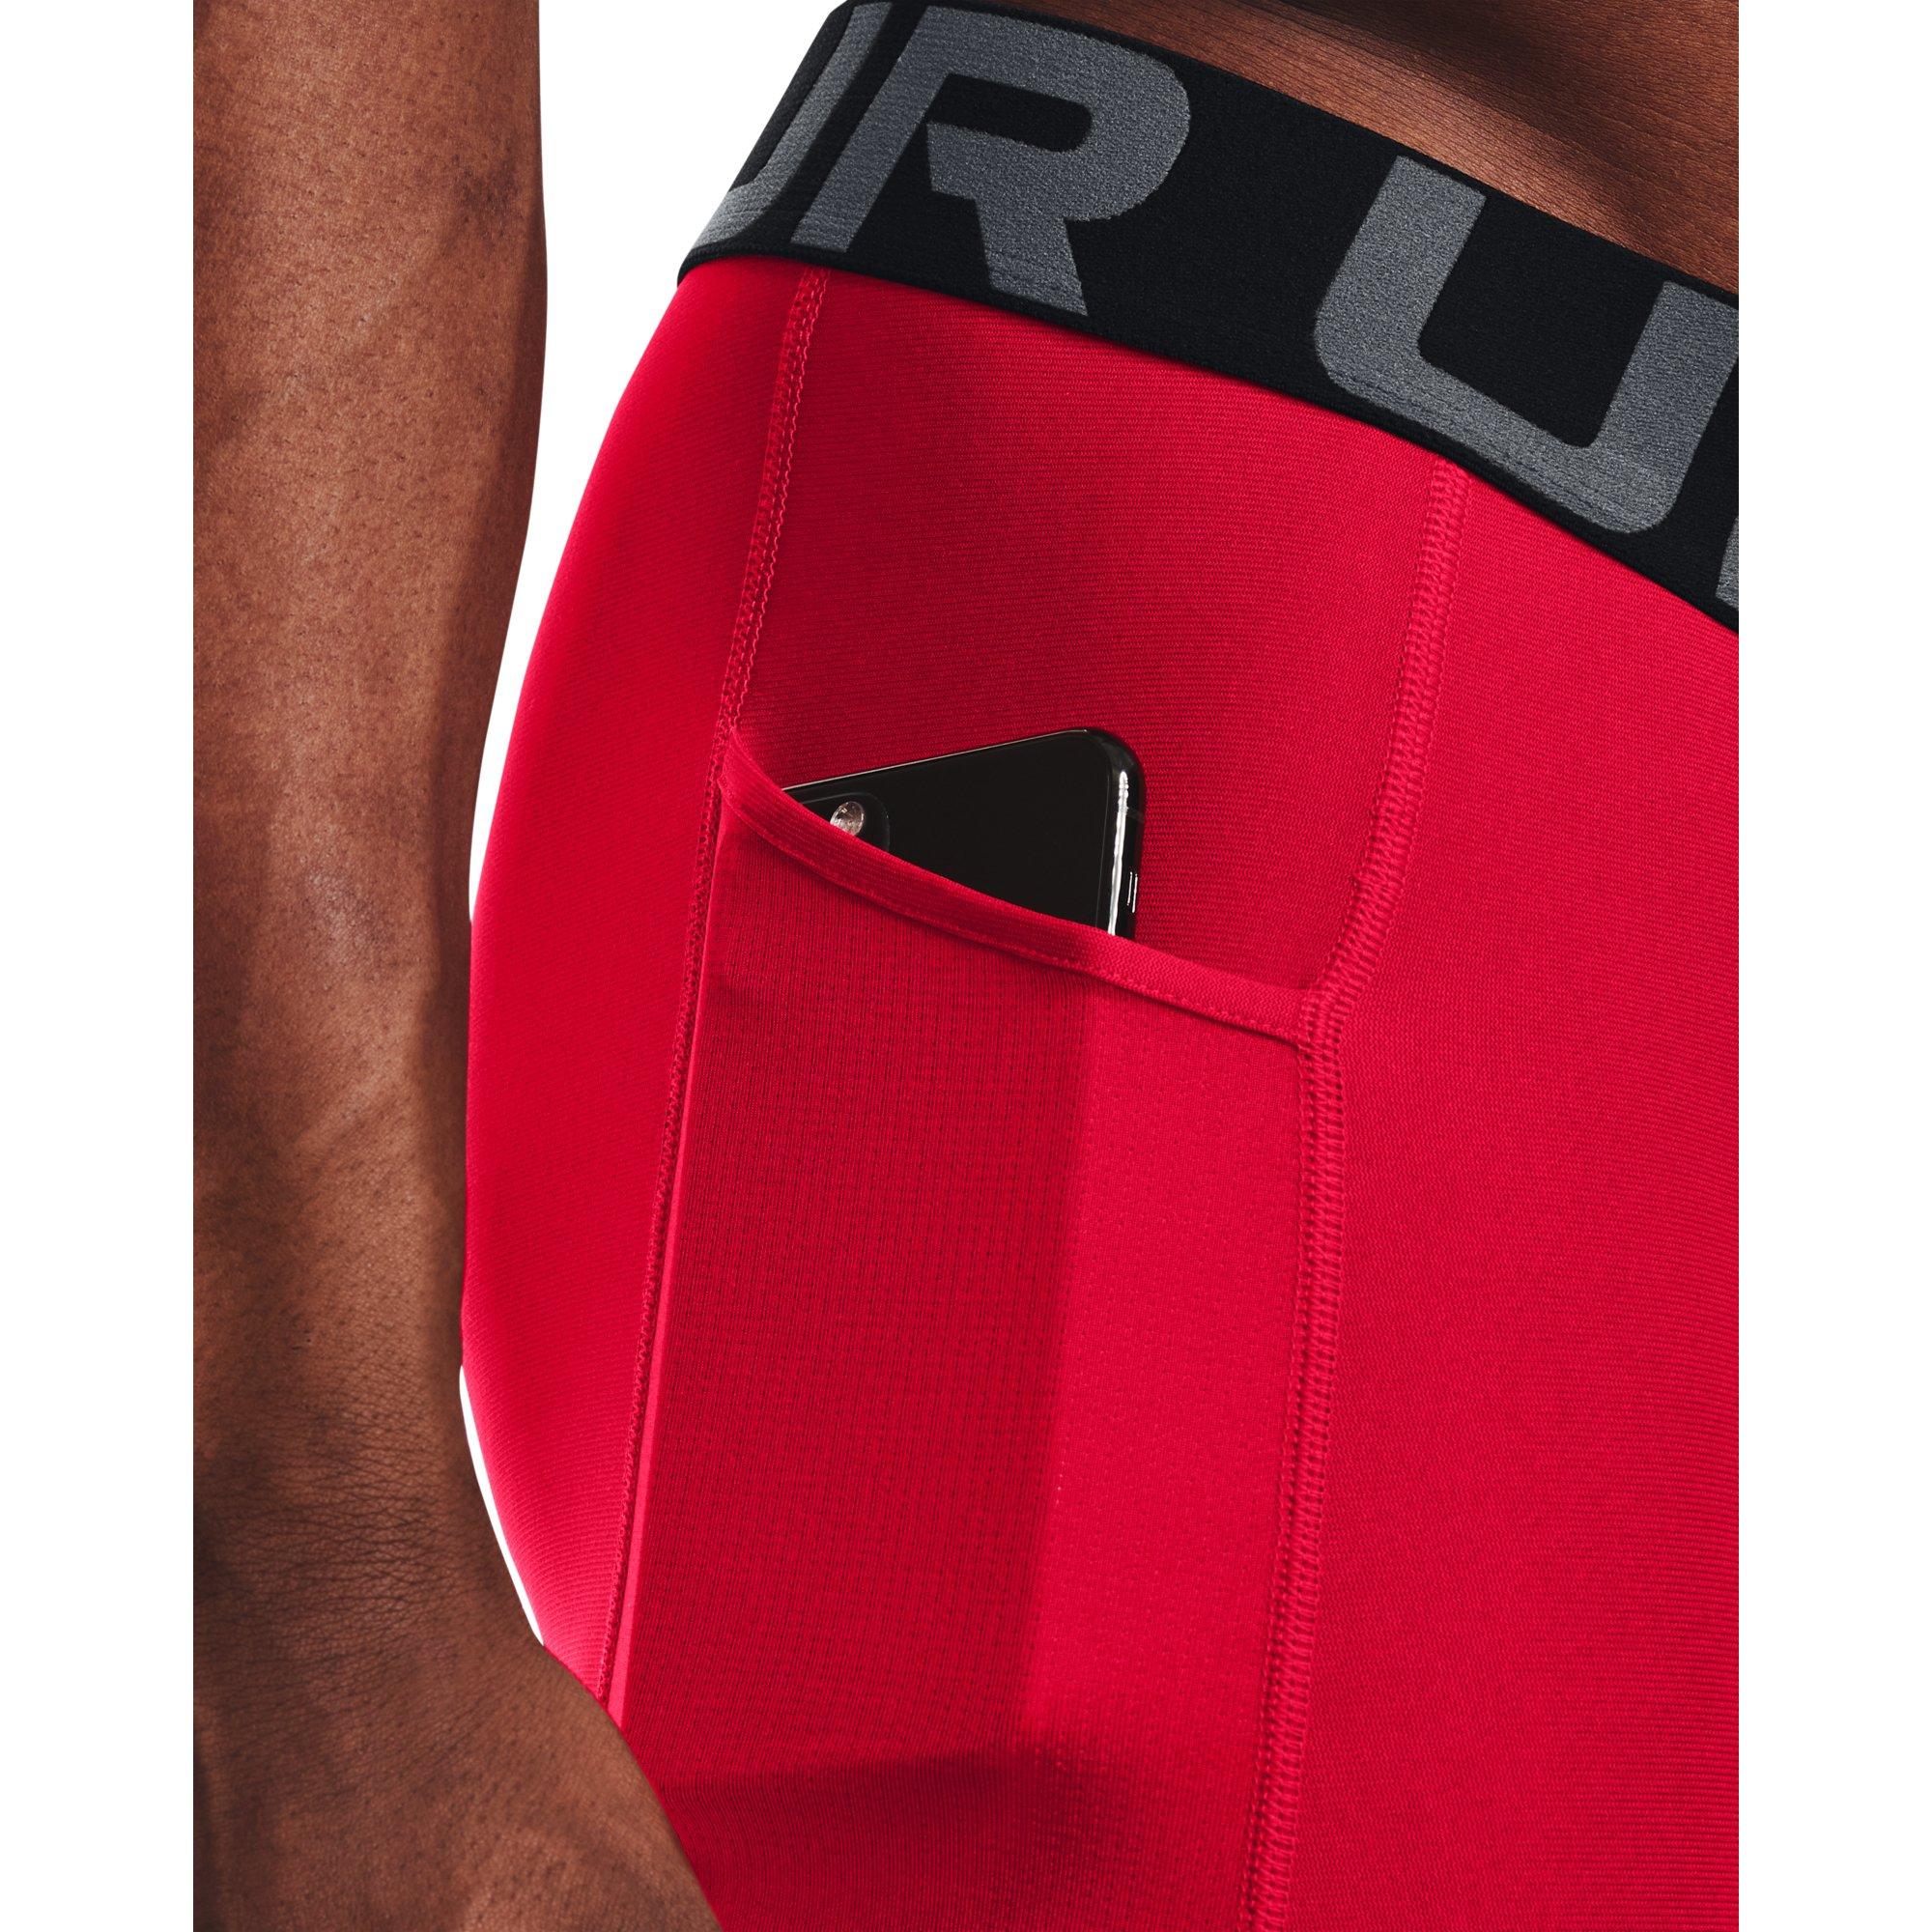 Under Armour HeatGear Compression Men's Inner Shorts (Red/Black)